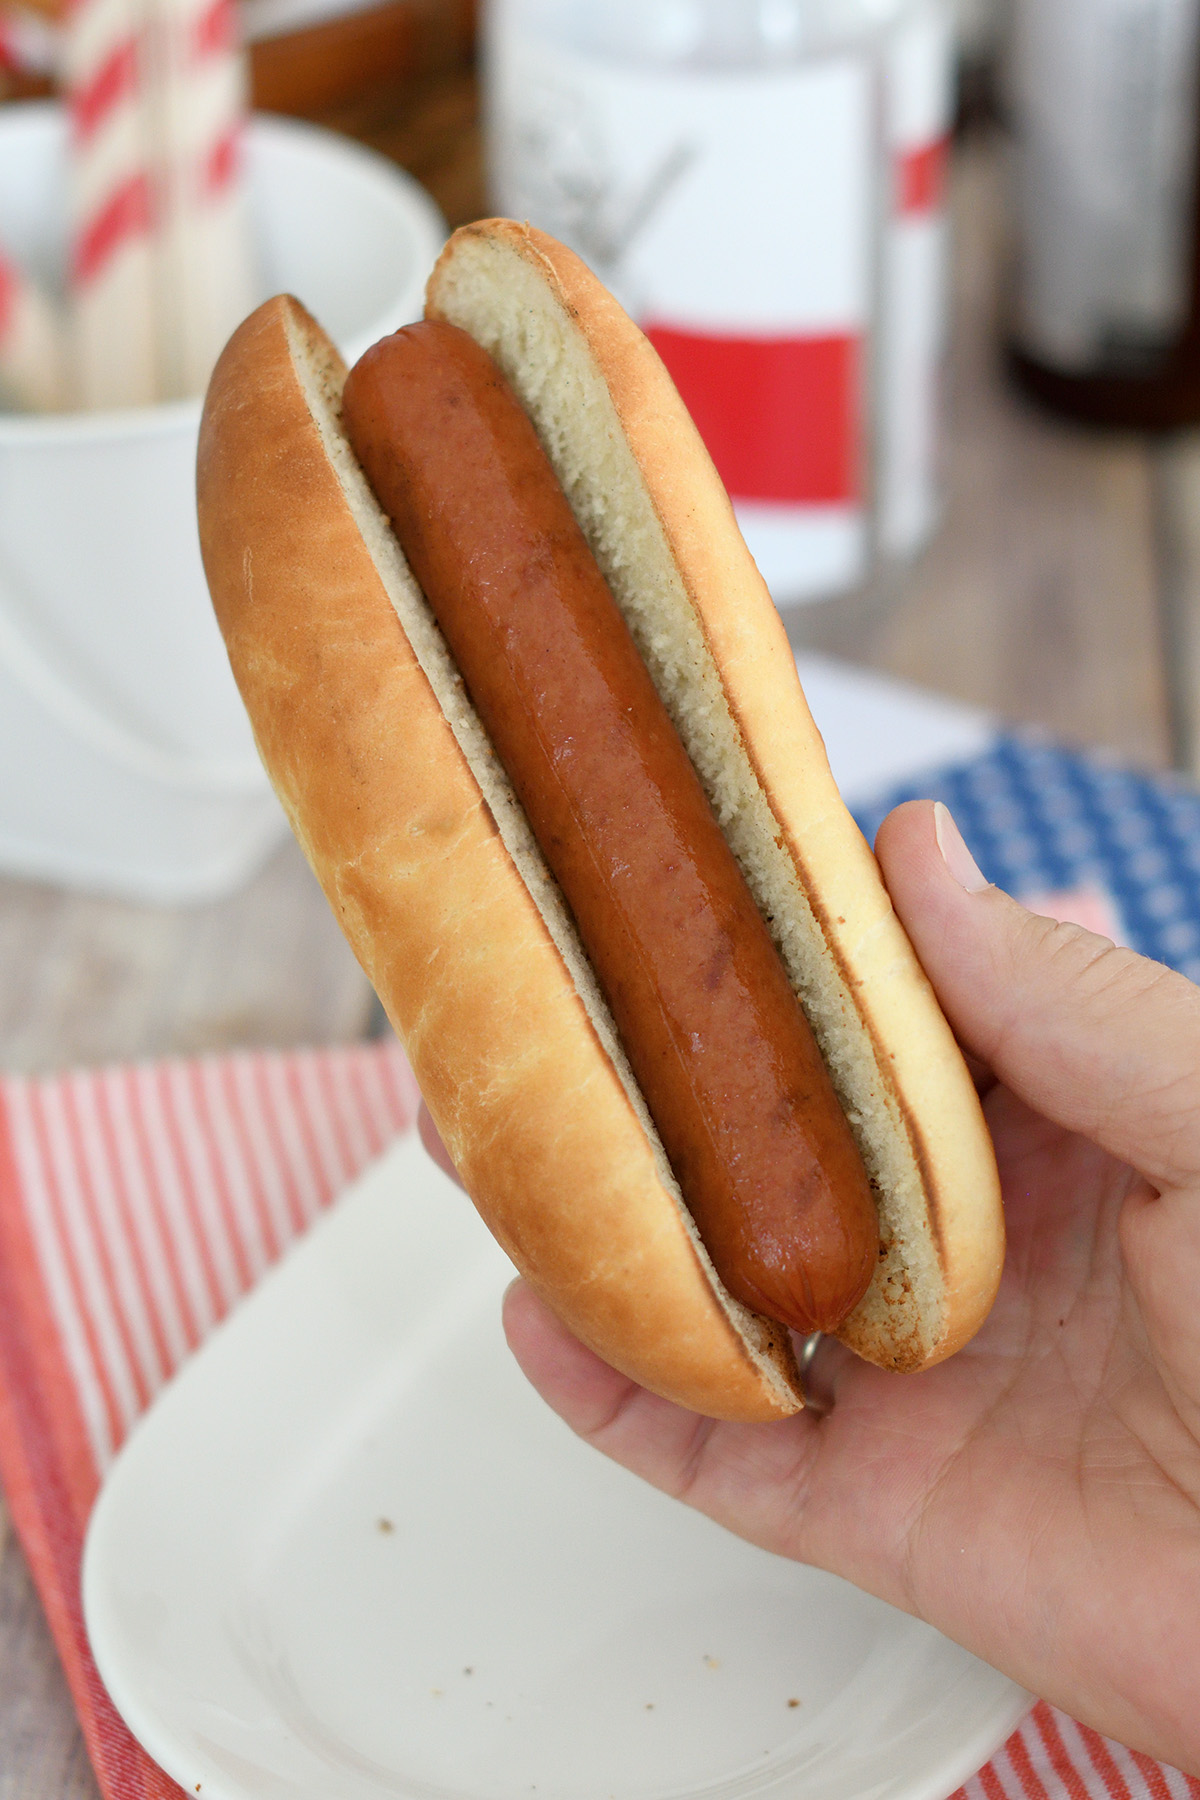 a hand holding a hot dog in a bun.